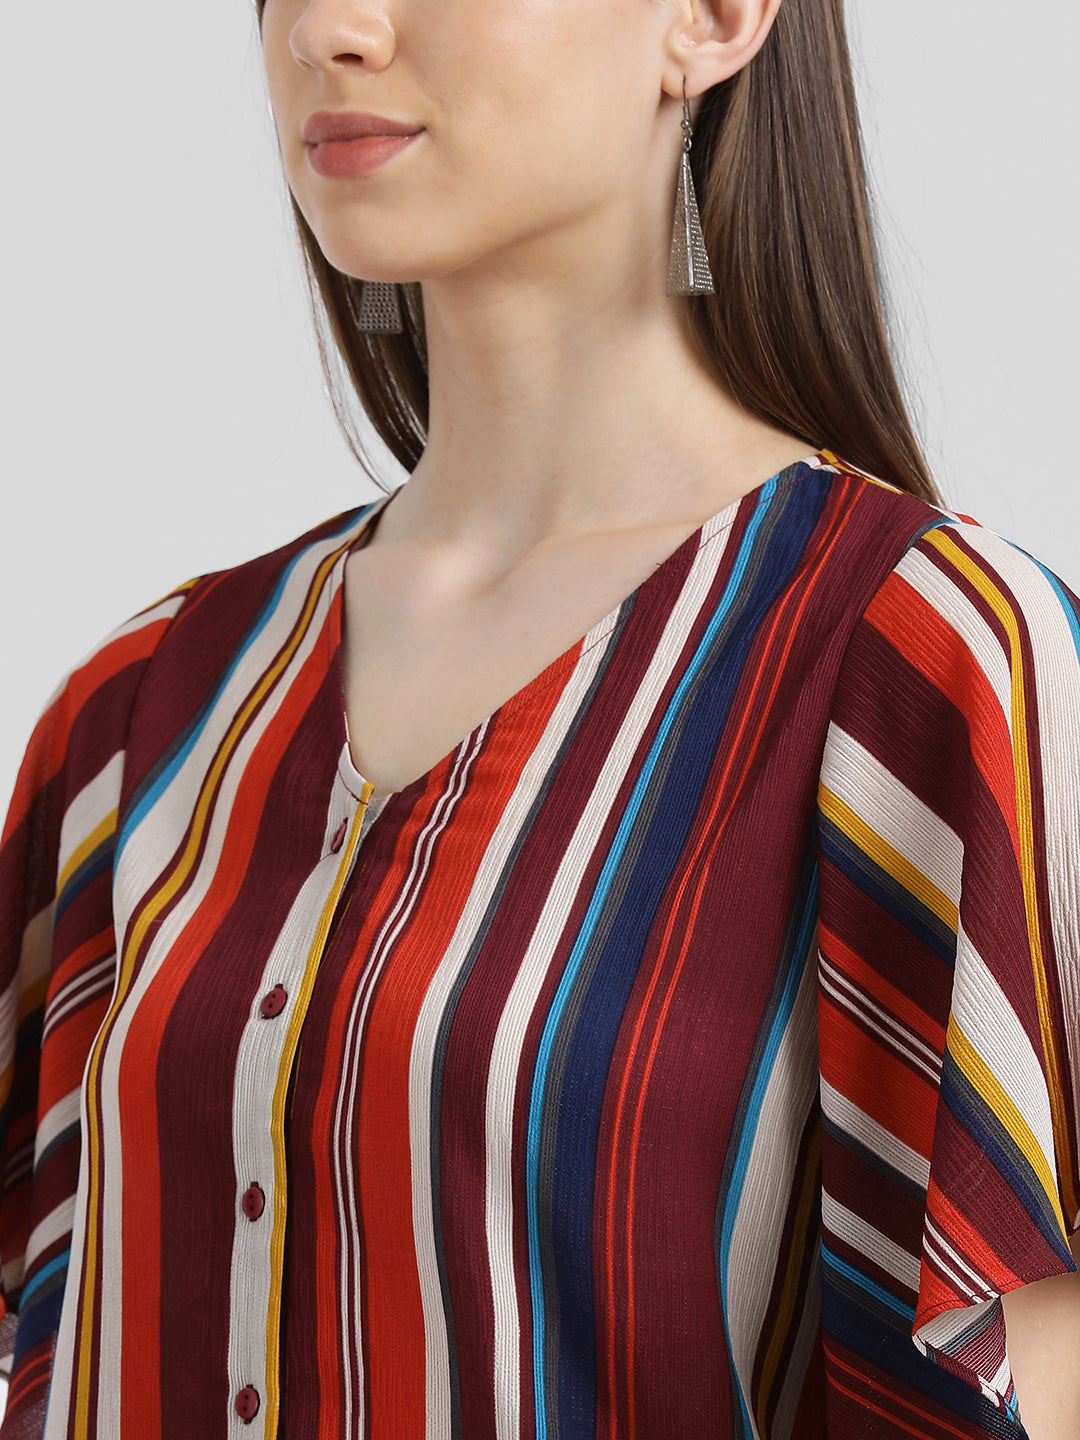 Zink London Women's Multi Striped Shirt Style Top